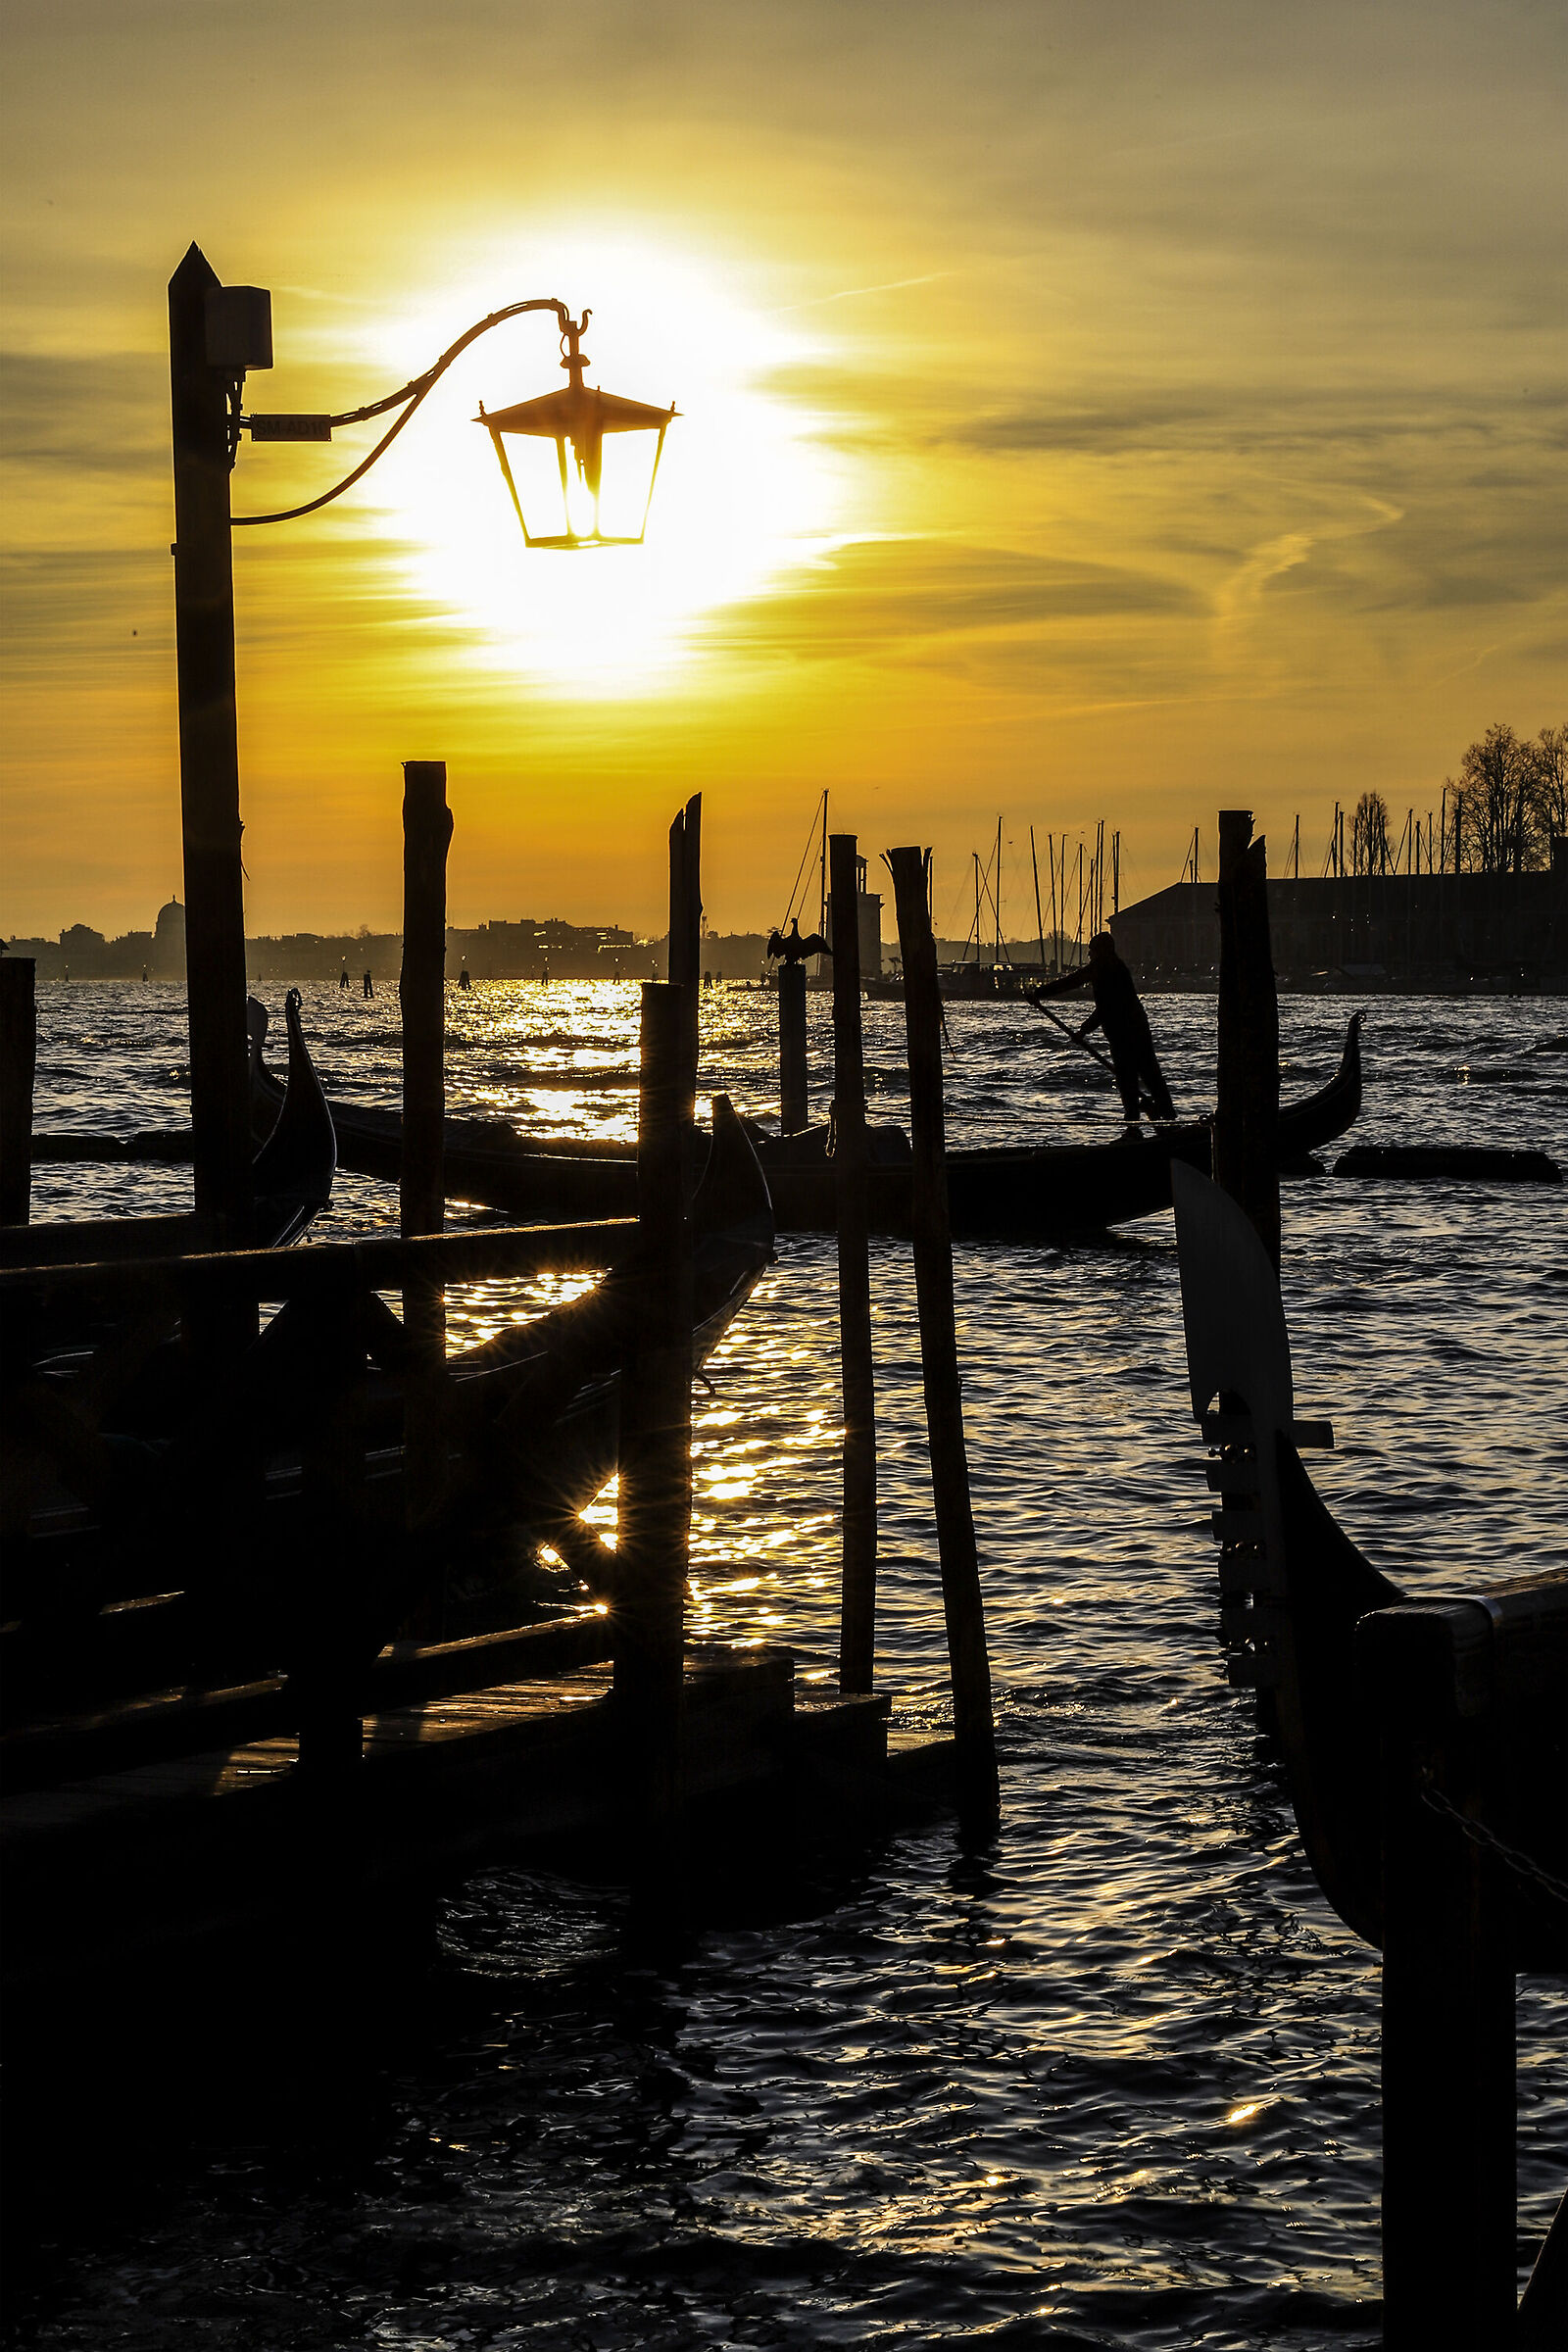 When the sun rises, Venice lights up ...